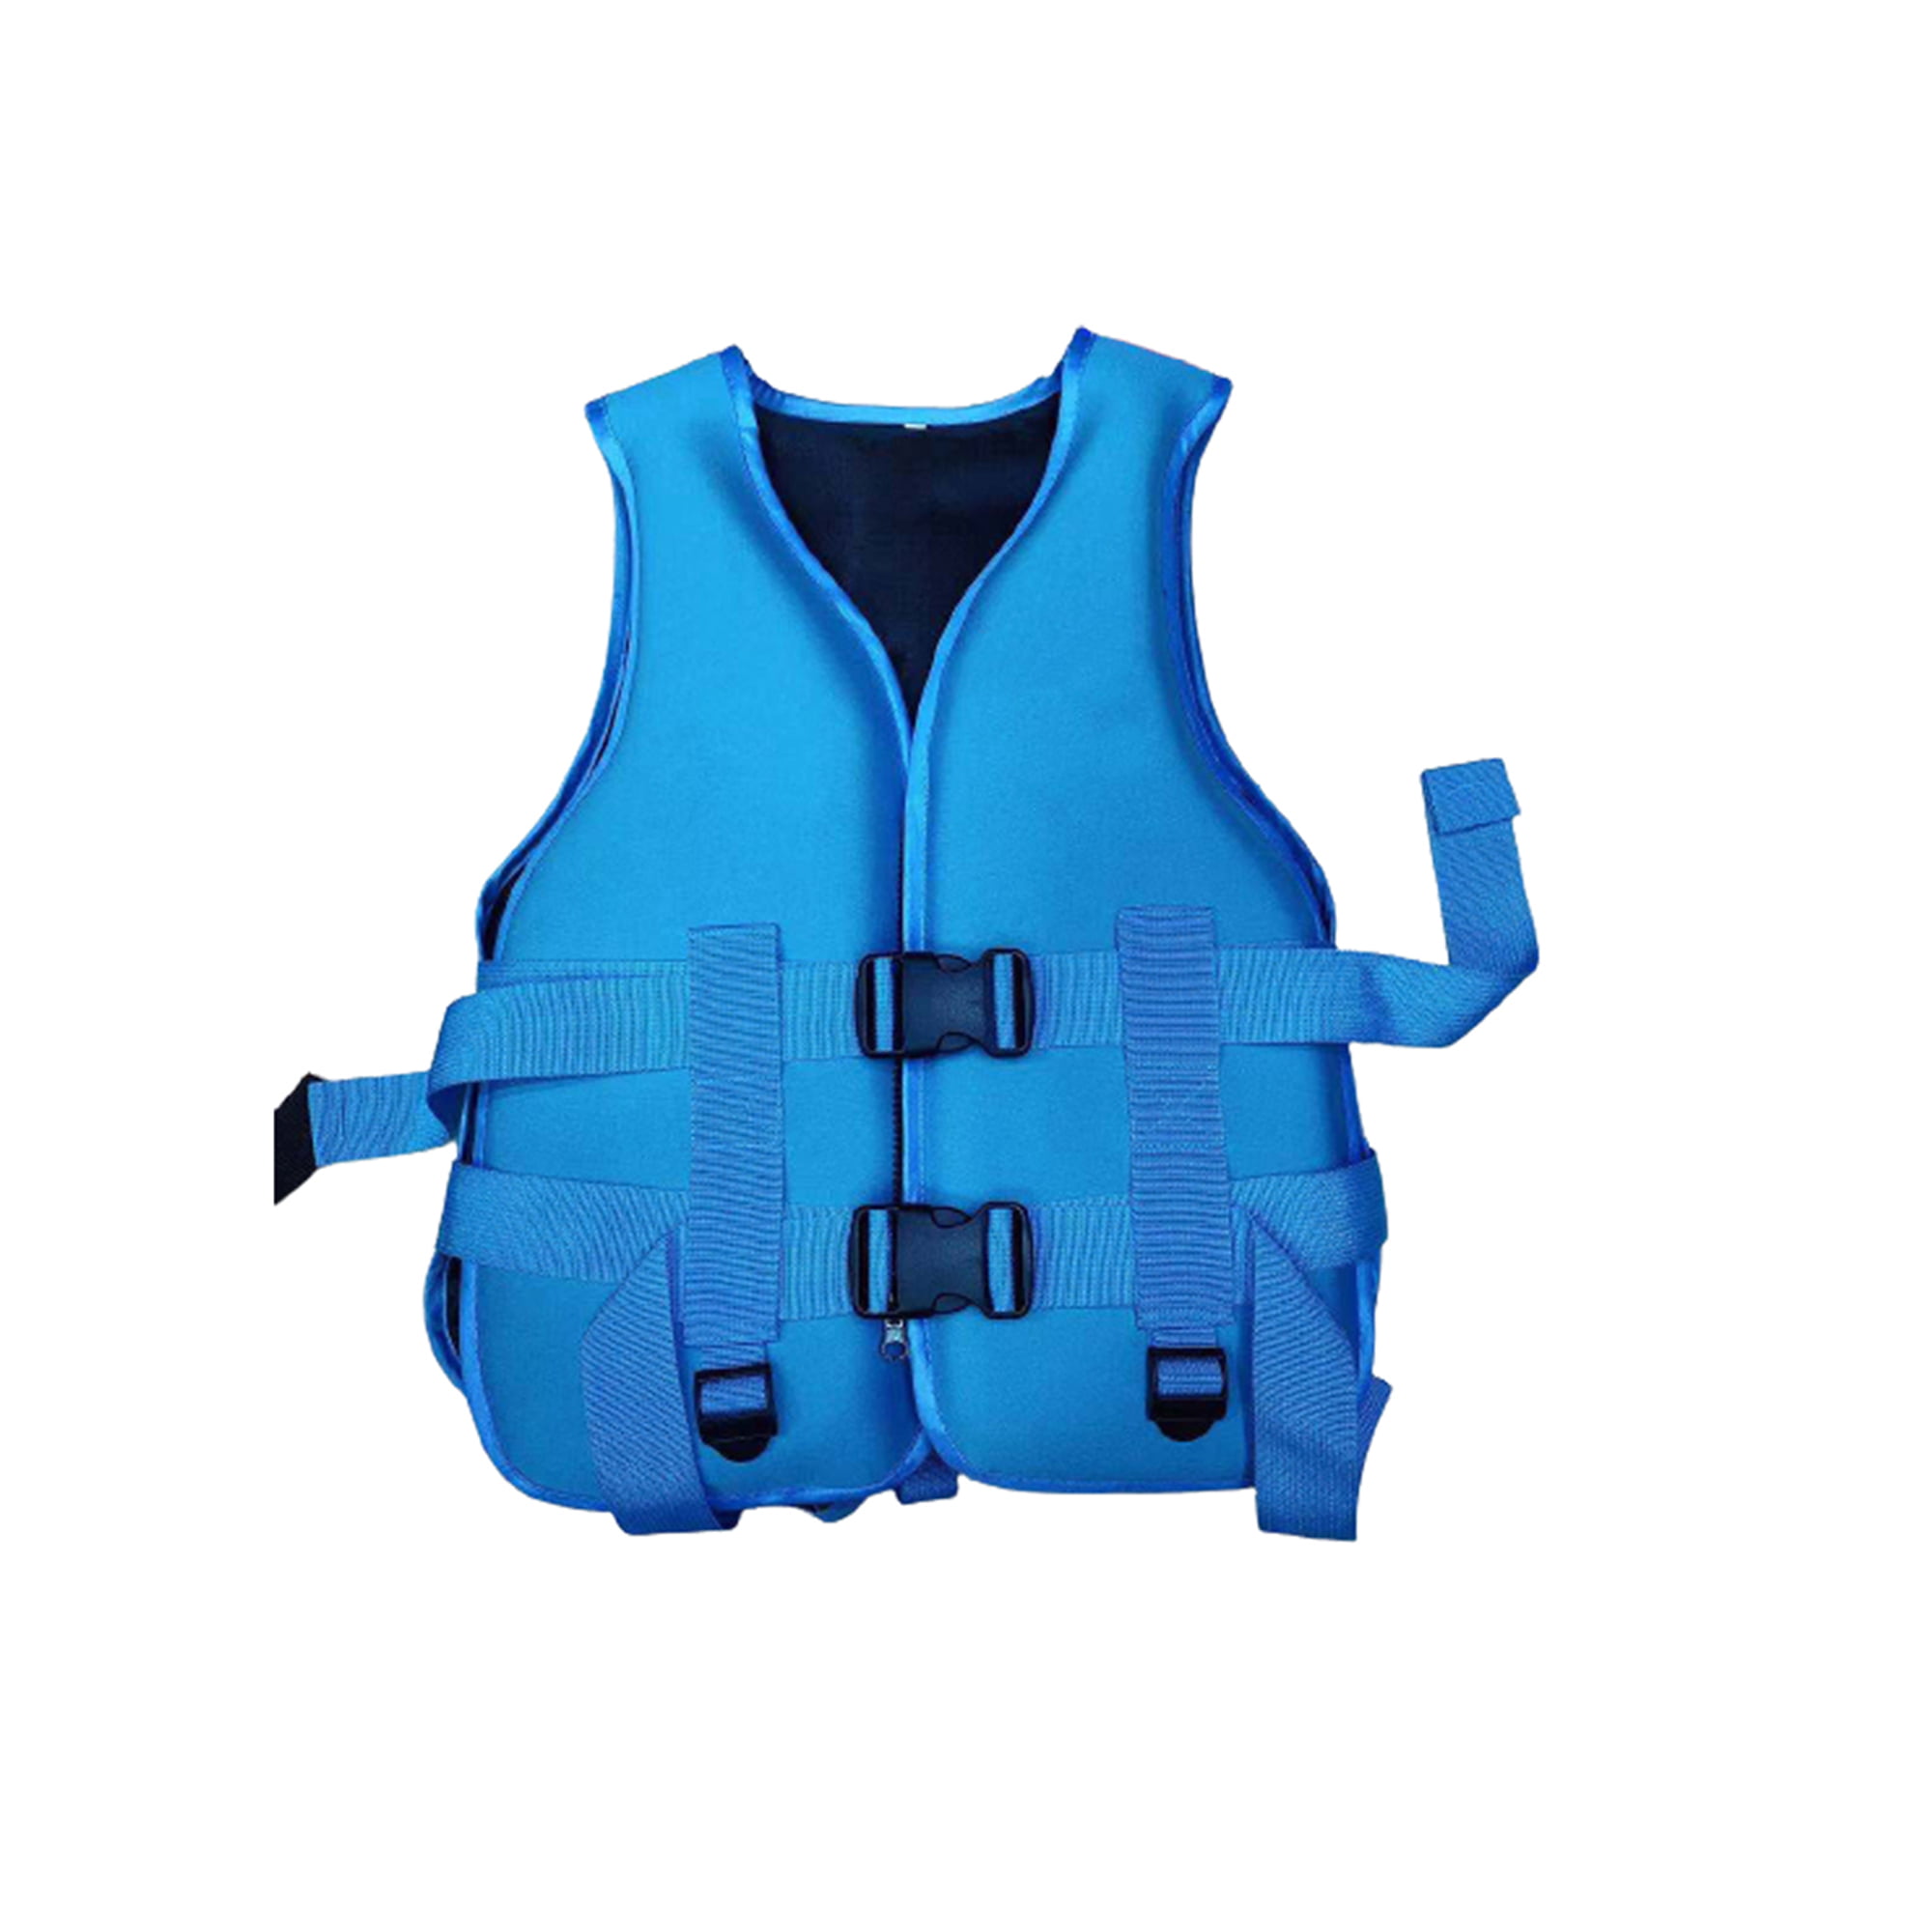 Details about   Adult Life Jackets Premium Neoprene Kids Safety Swim Aid Vest Buoyancy PFD Vests 